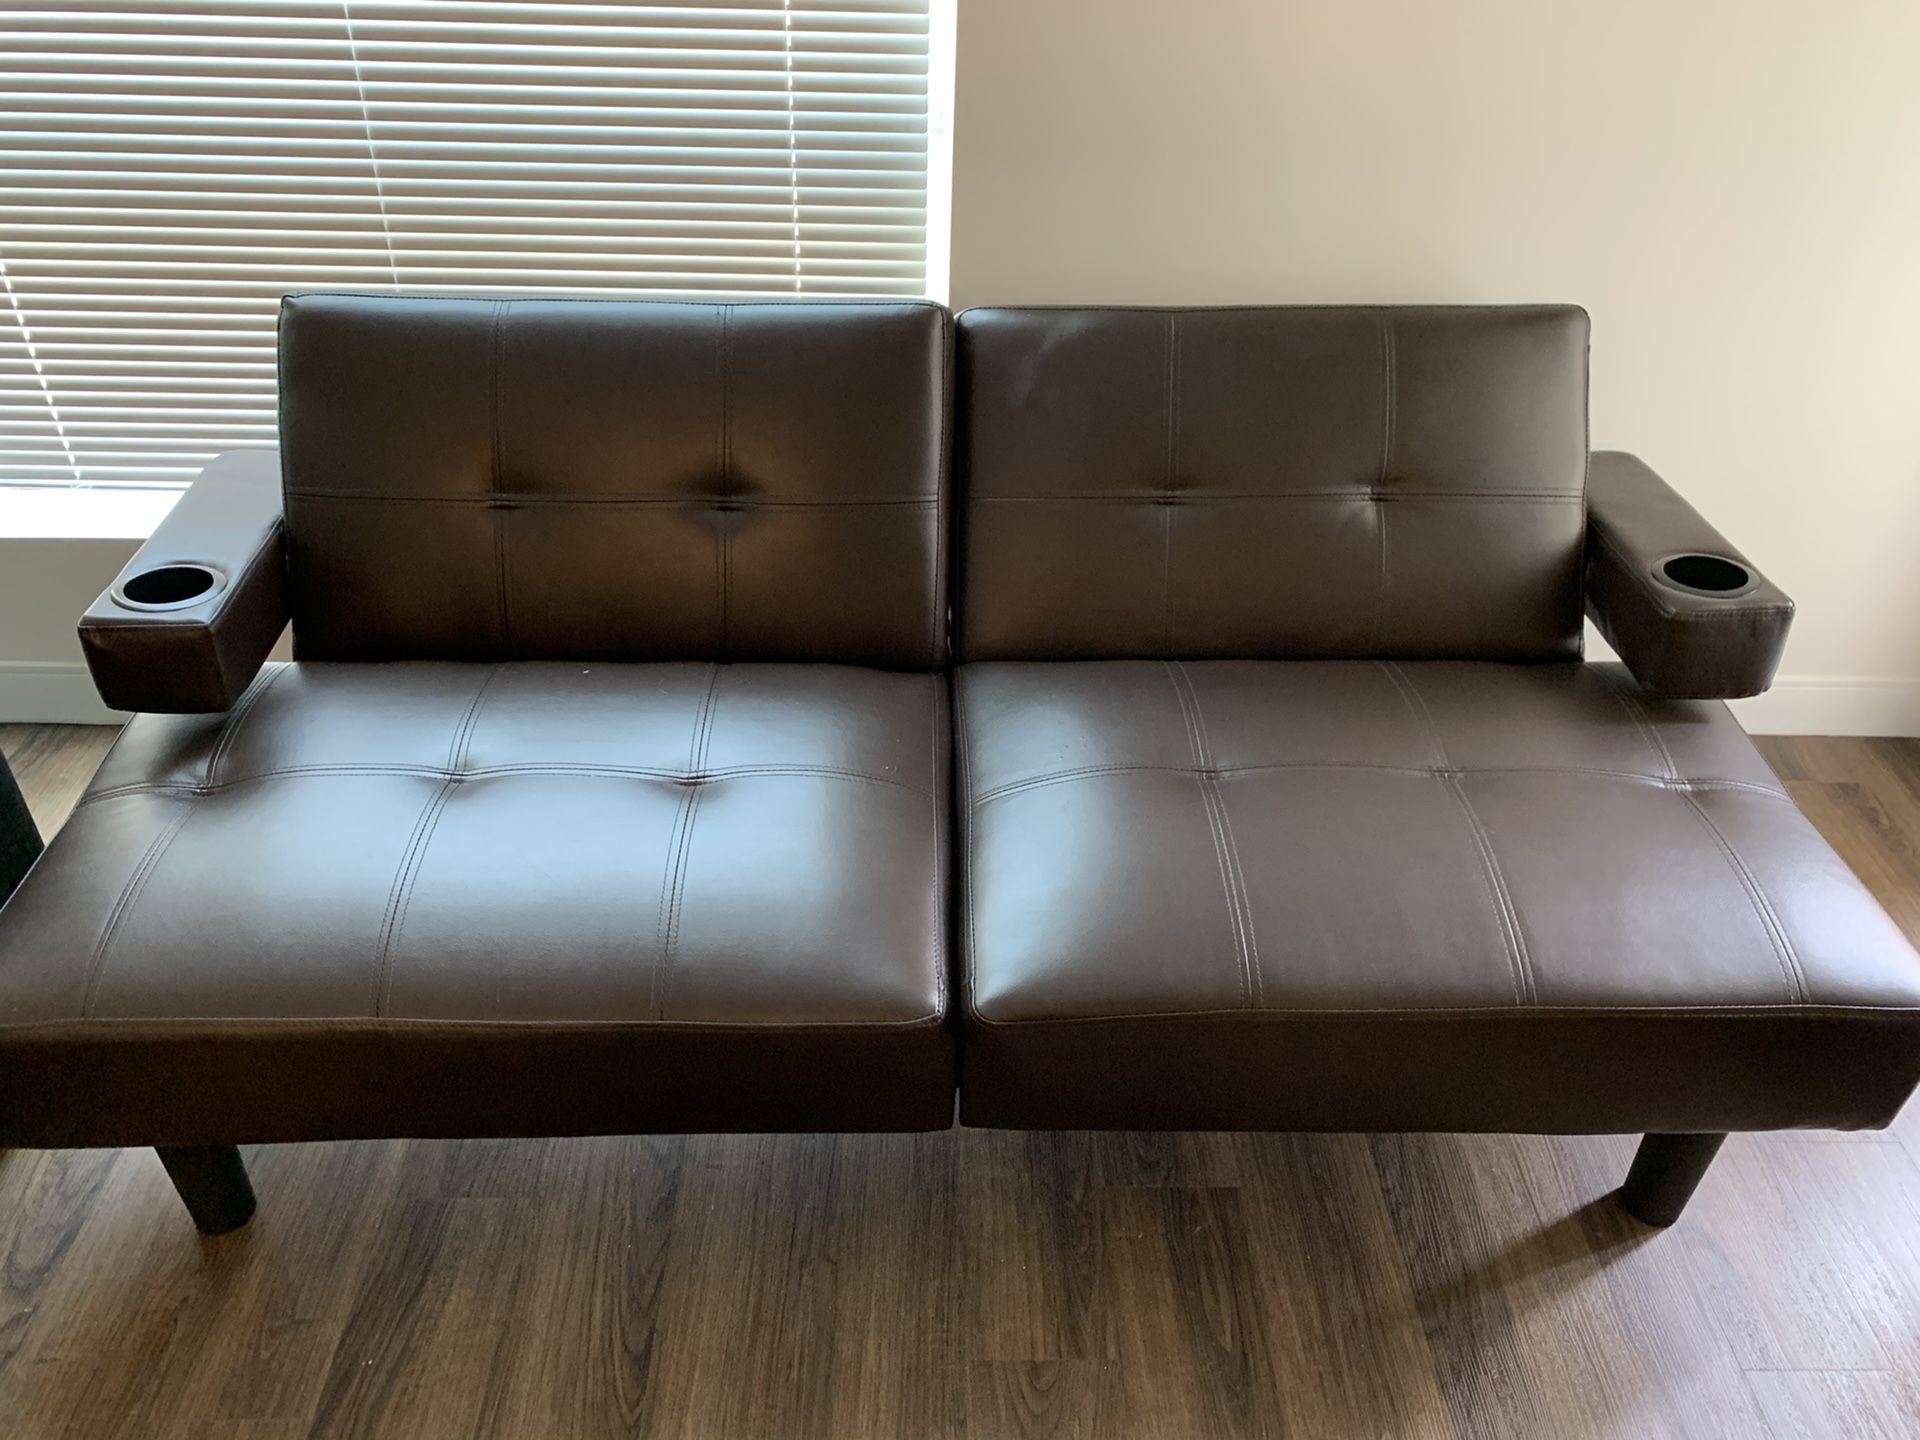 Faux leather futon - espresso color